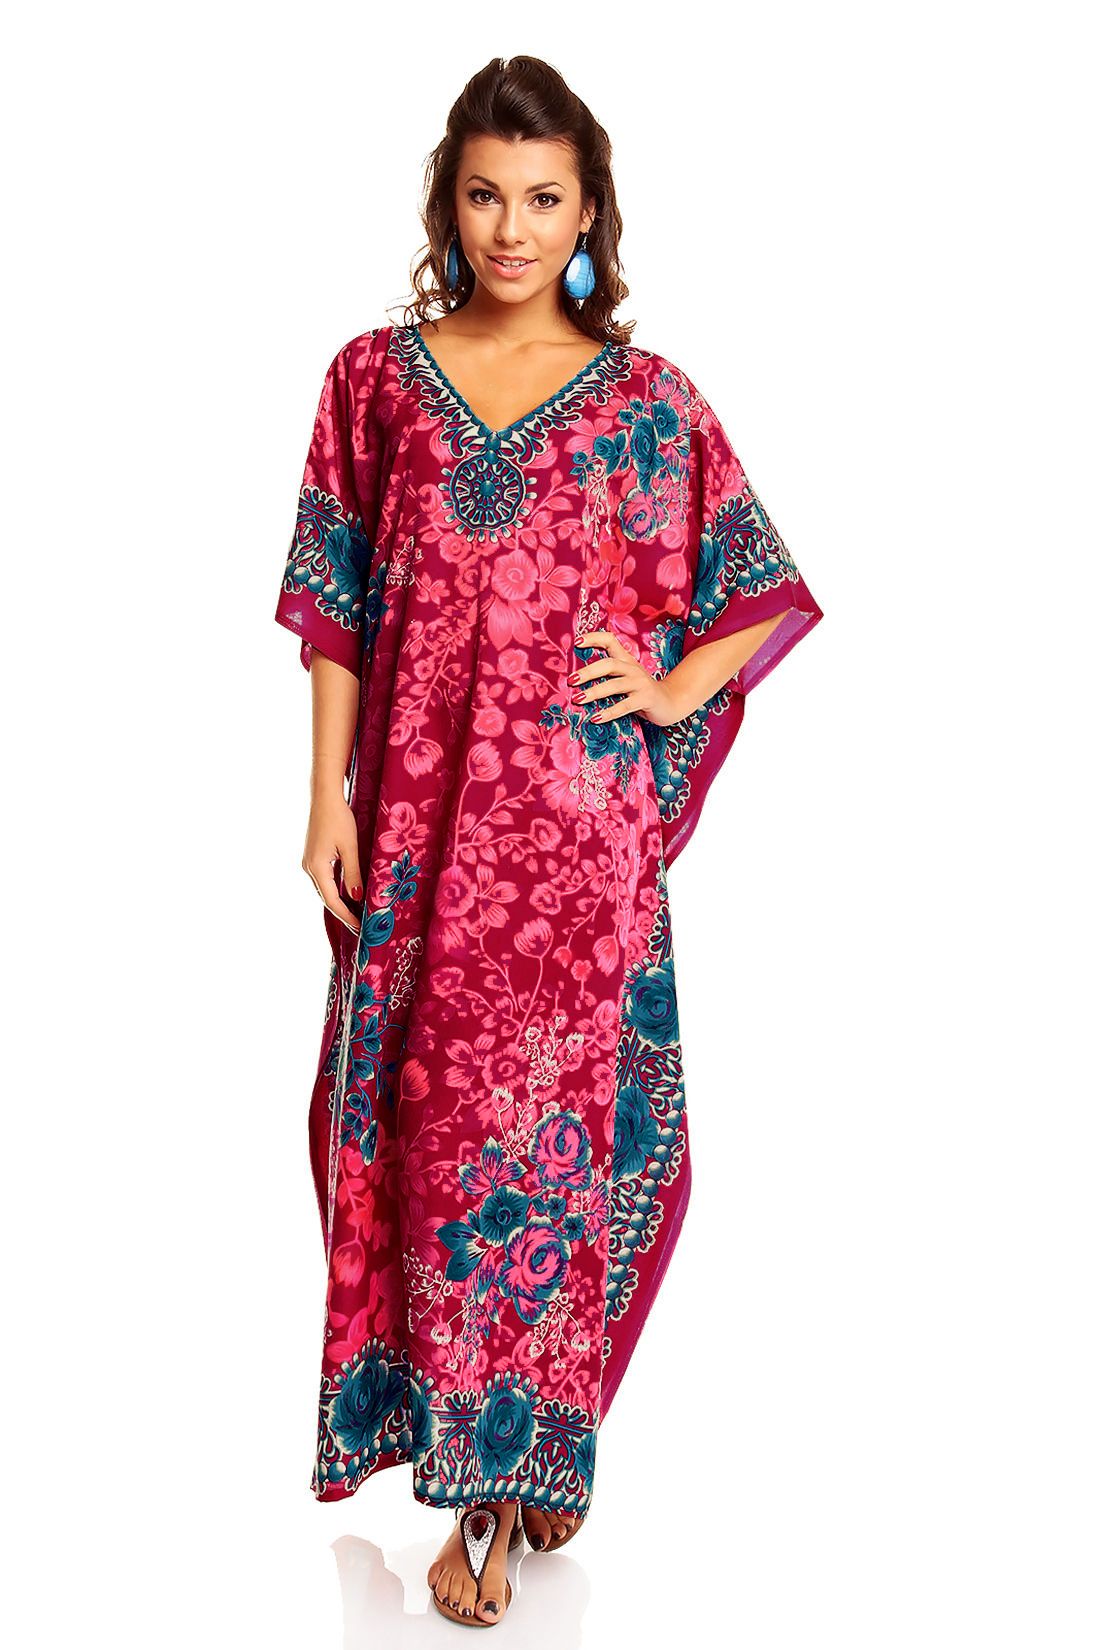 Ladies Full Length Maxi Kaftan Floral Dress in Cerise Pink